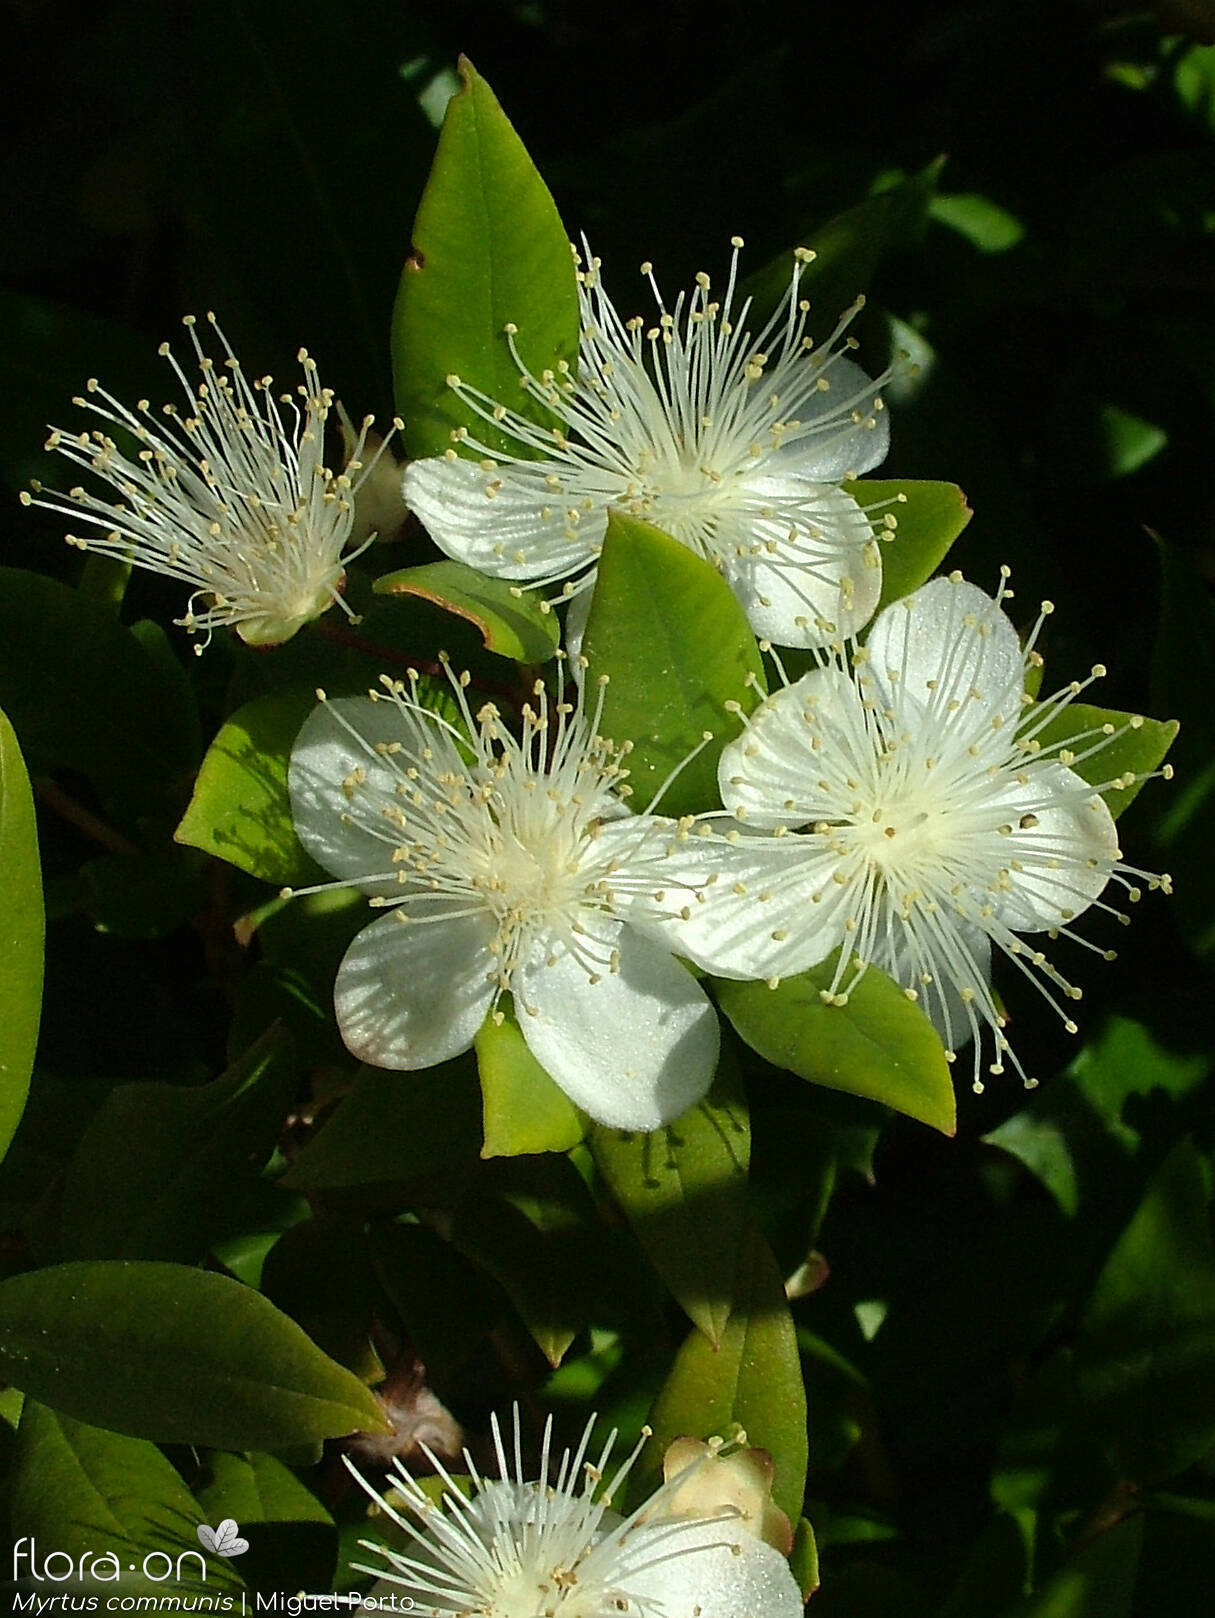 Myrtaceae